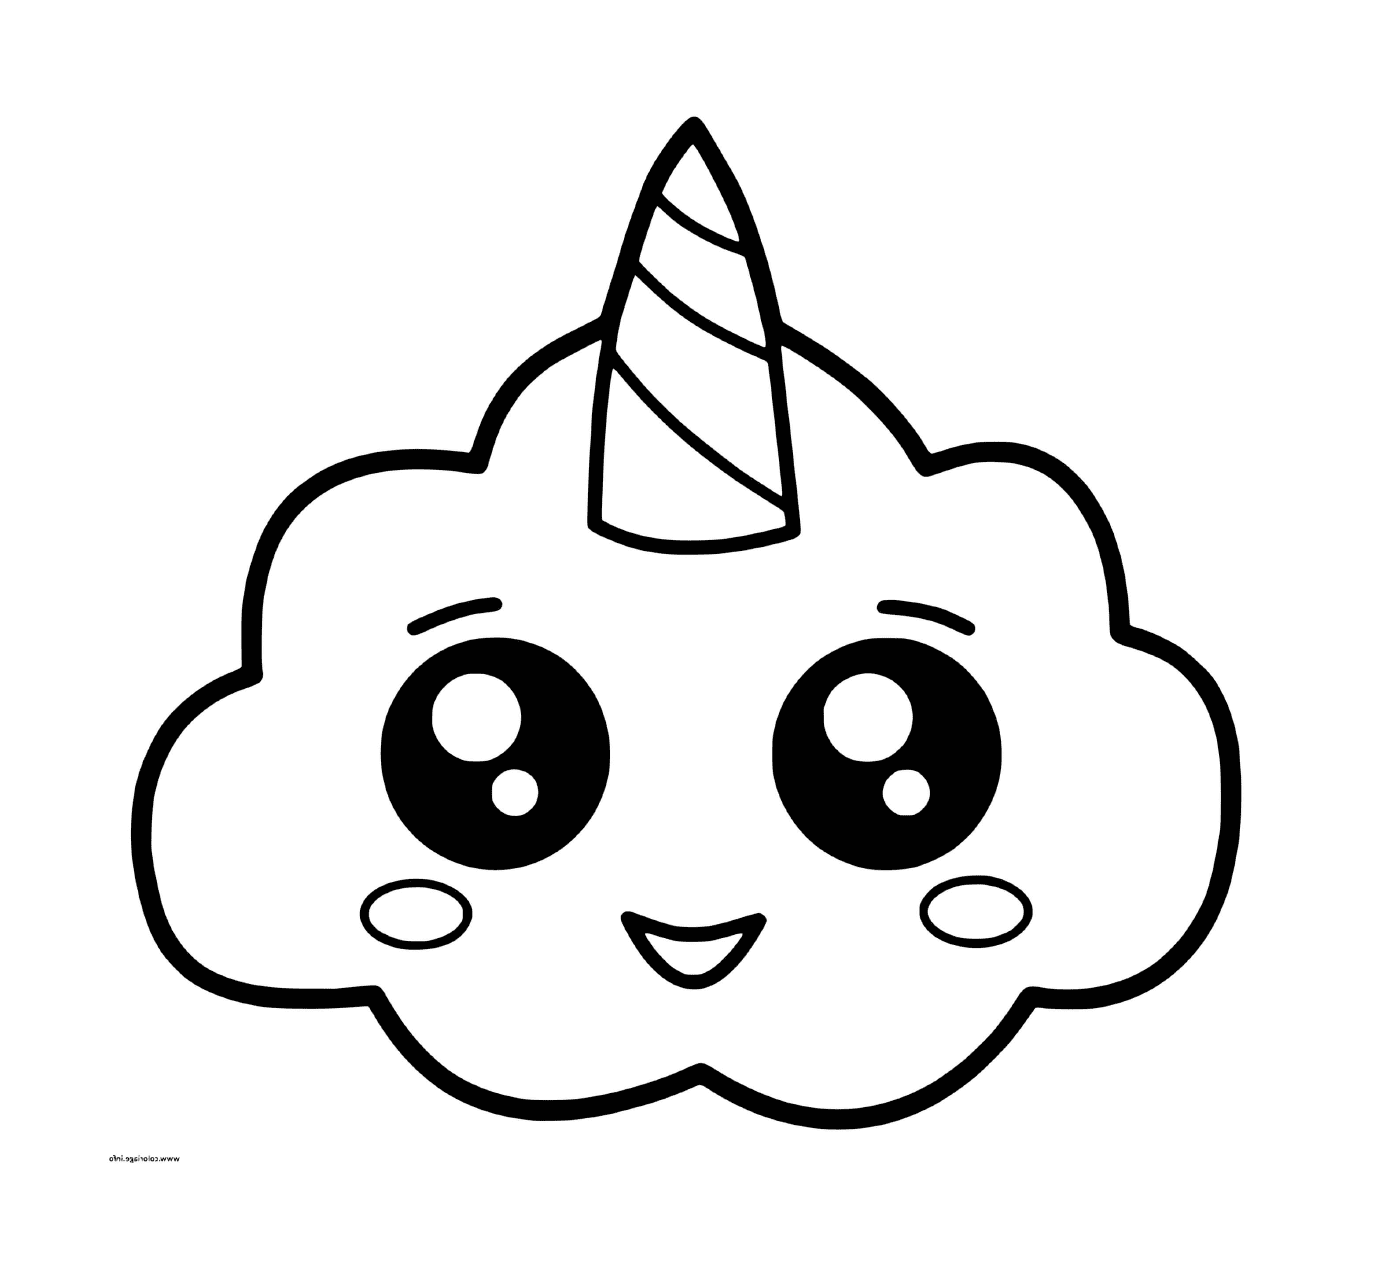  cloud with a unicorn horn 